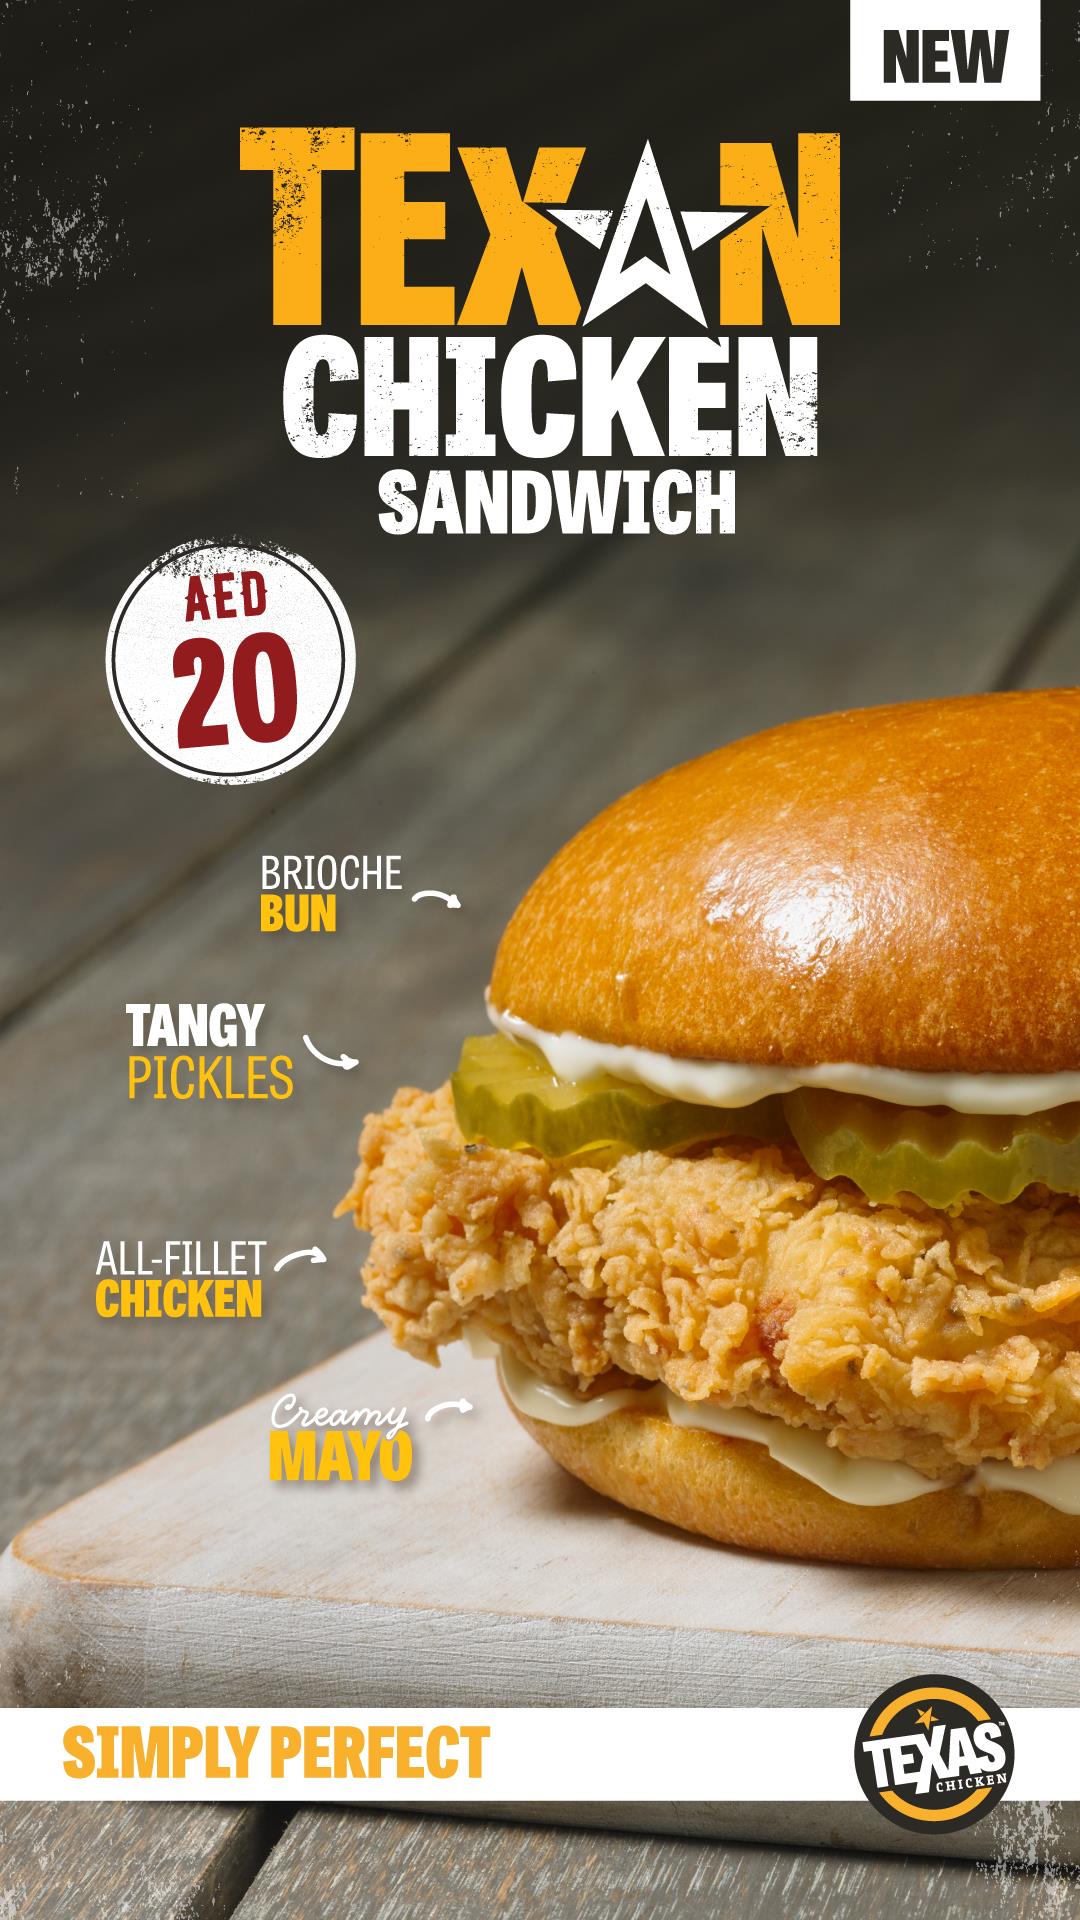 Texas Chicken Original Sandwich Meal